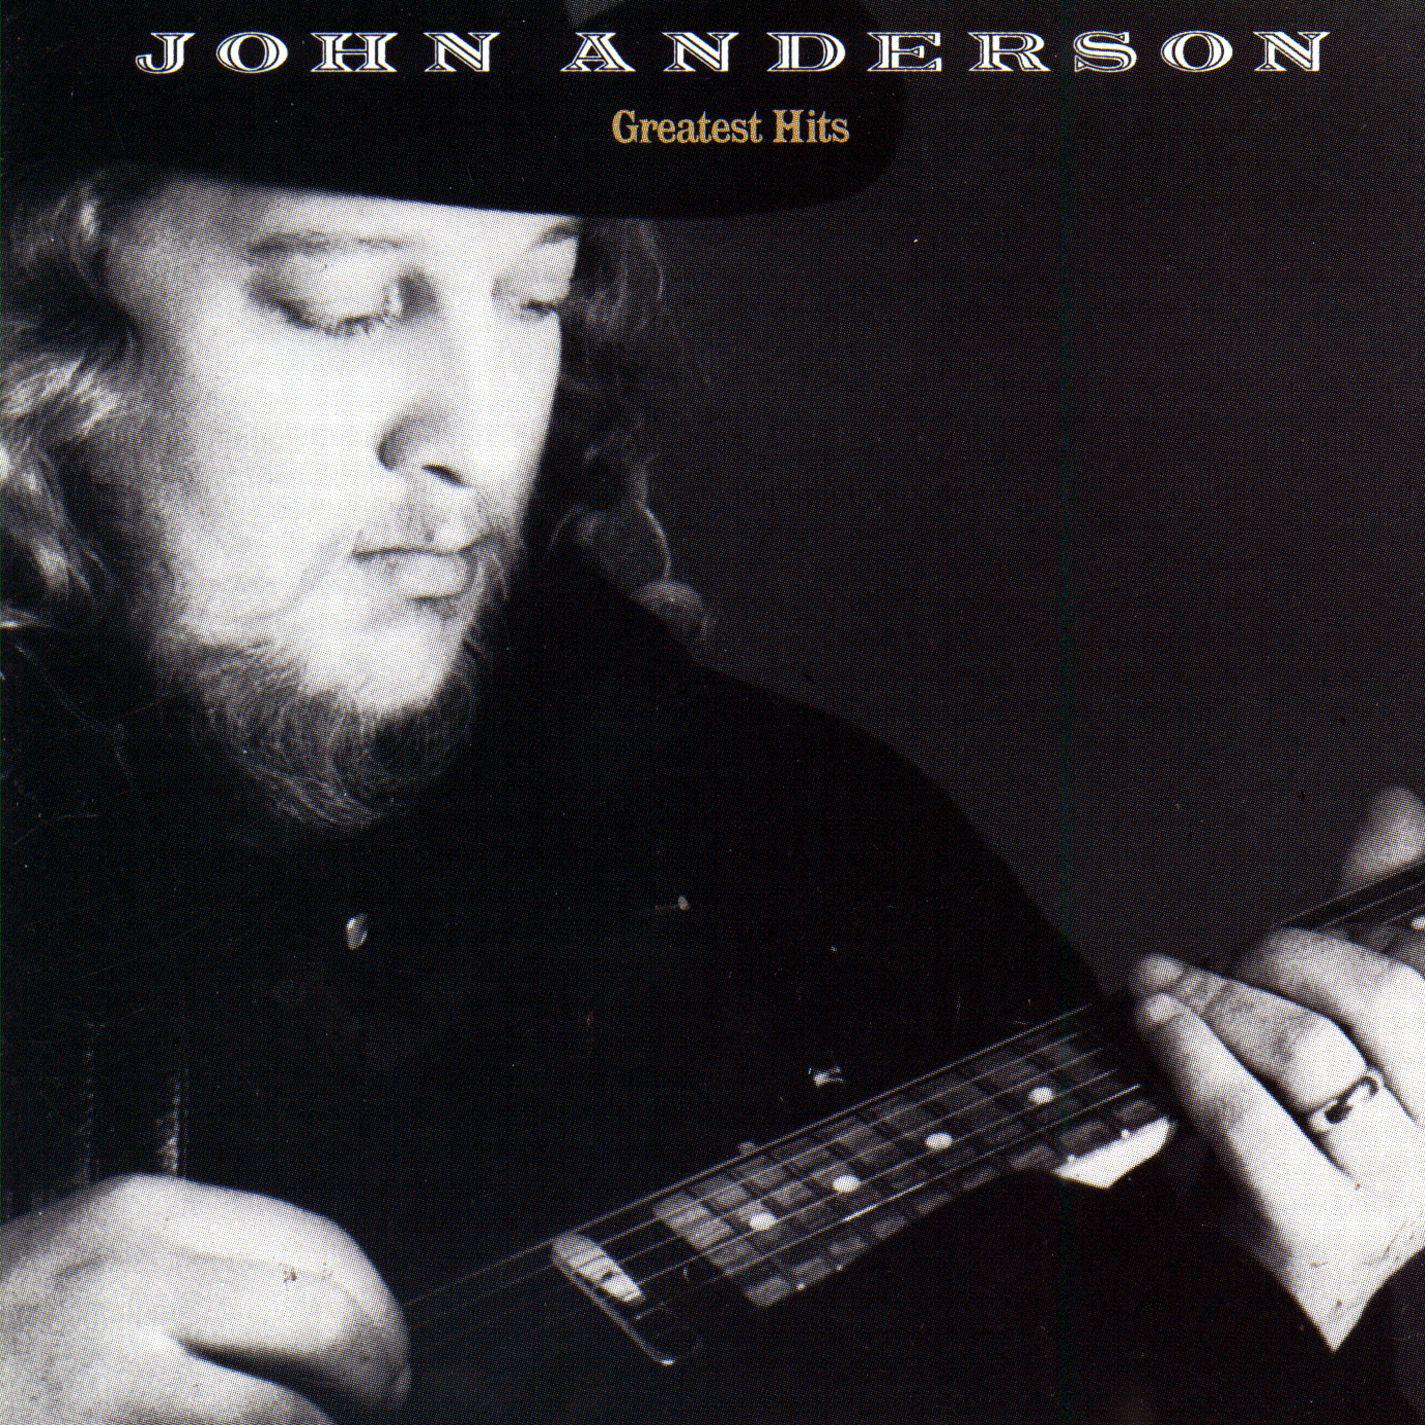 John Anderson - Swingin'